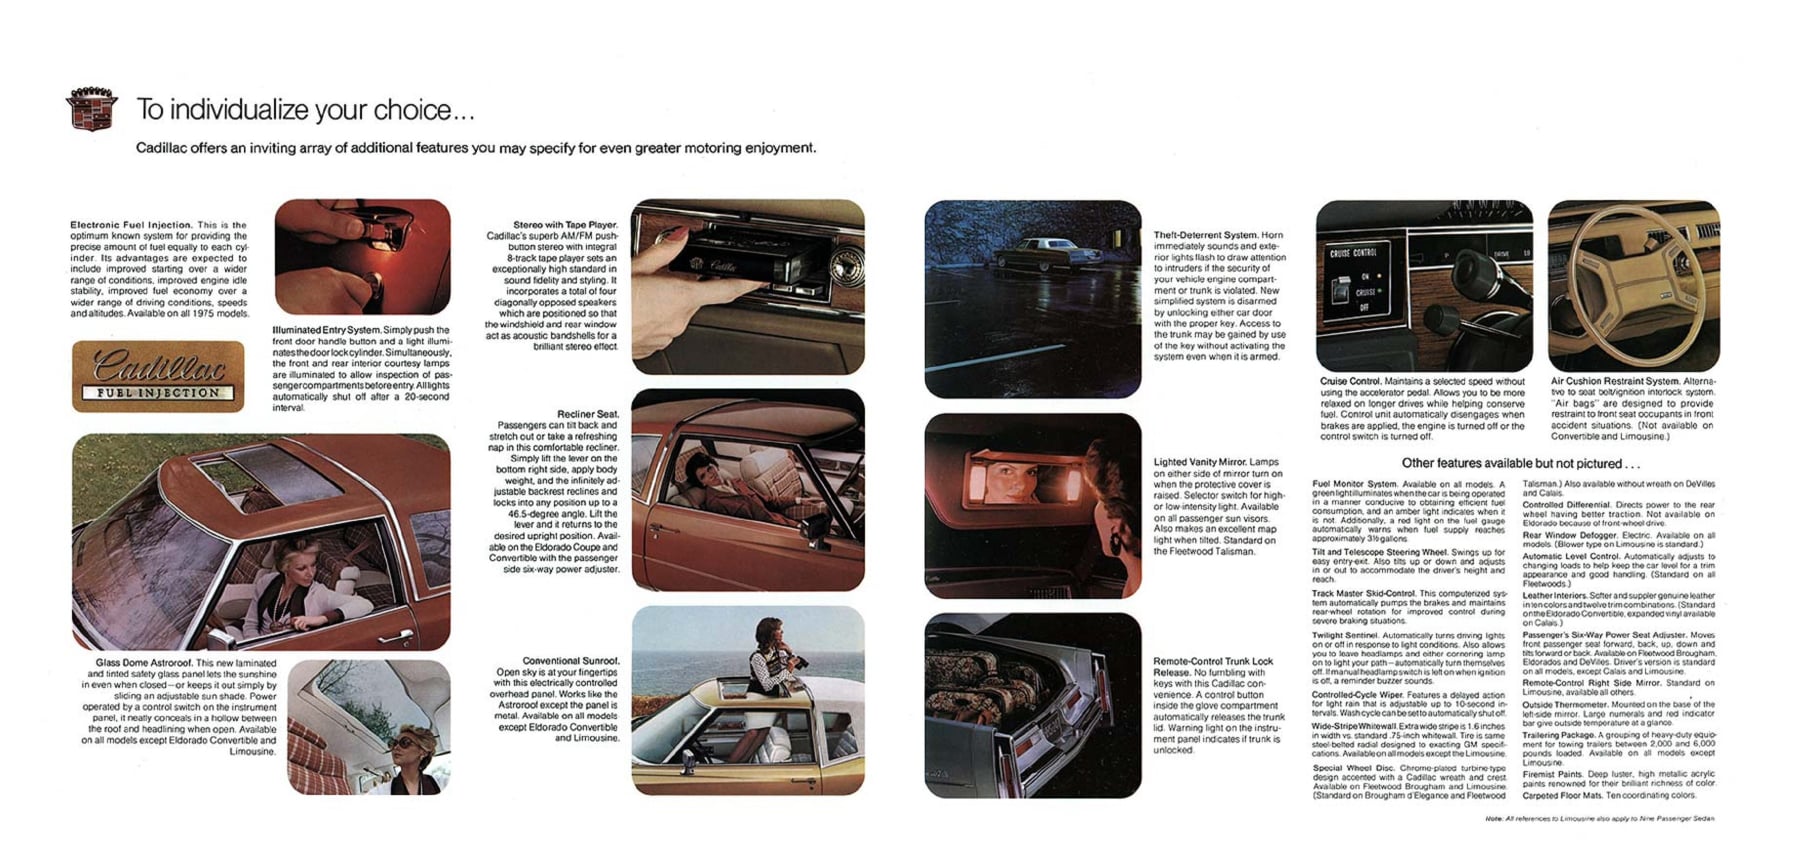 1975 Cadillac Prestige Brochure 24-25